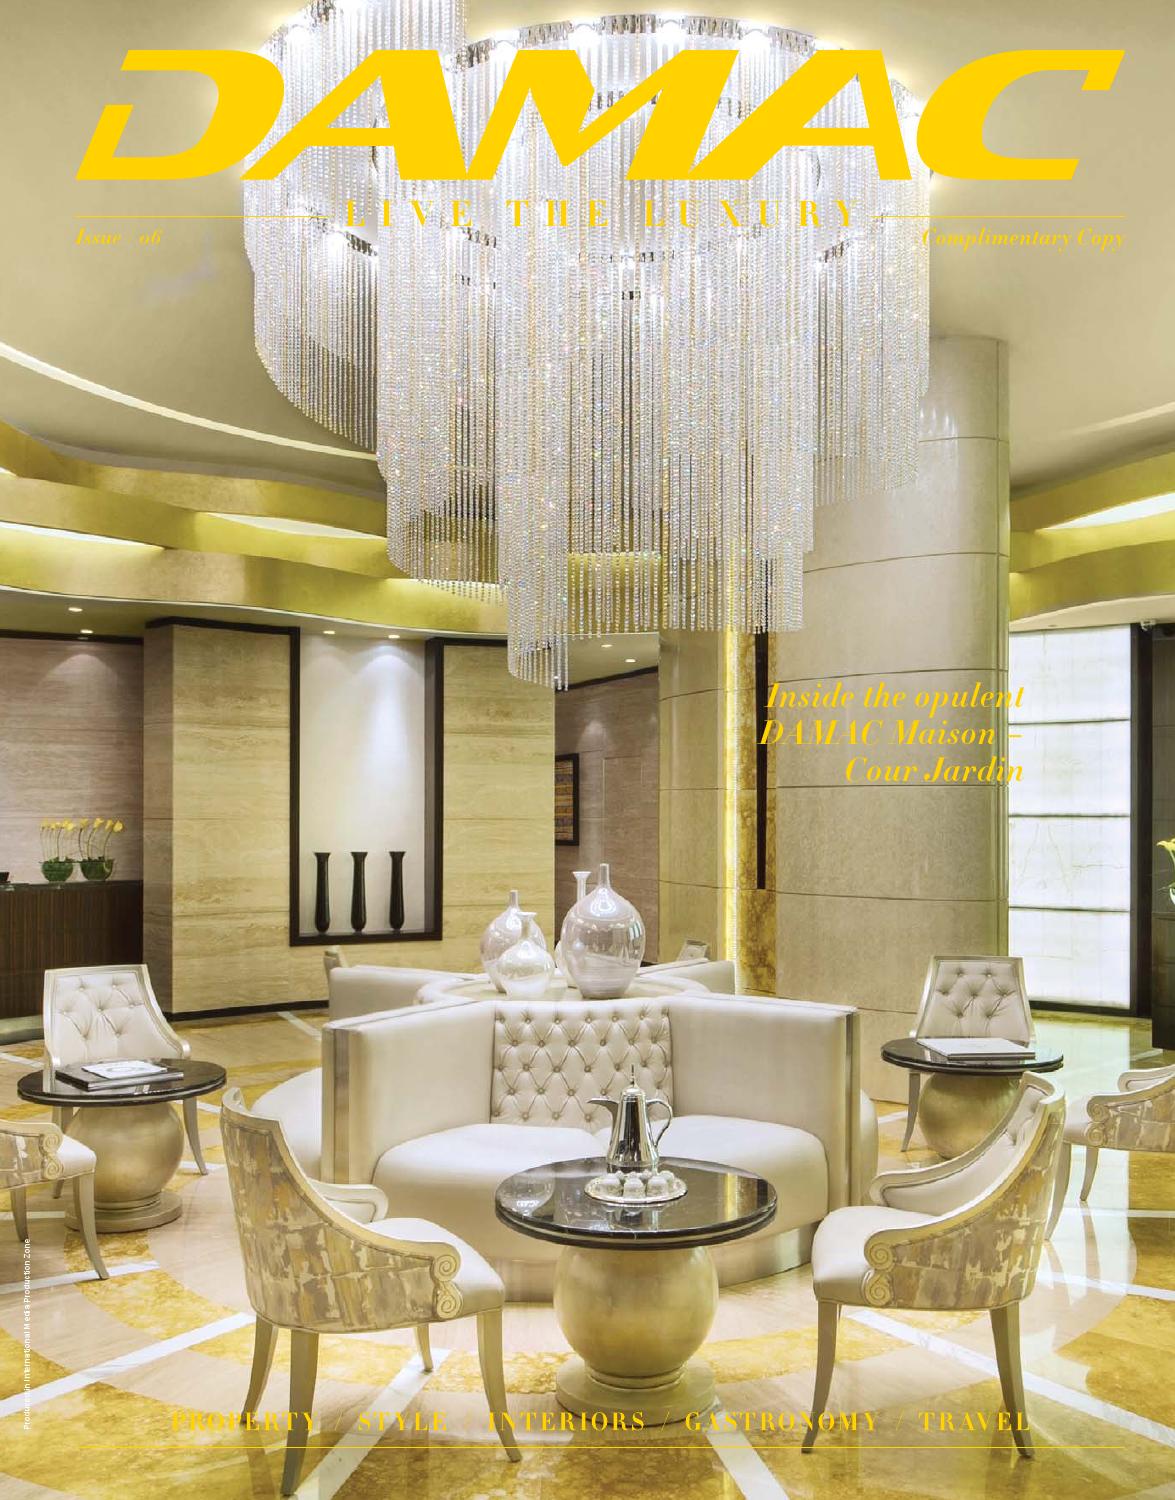 Table Roulante De Jardin Luxe Damac Magazine issue 06 Apr 2015 by Damac Properties issuu